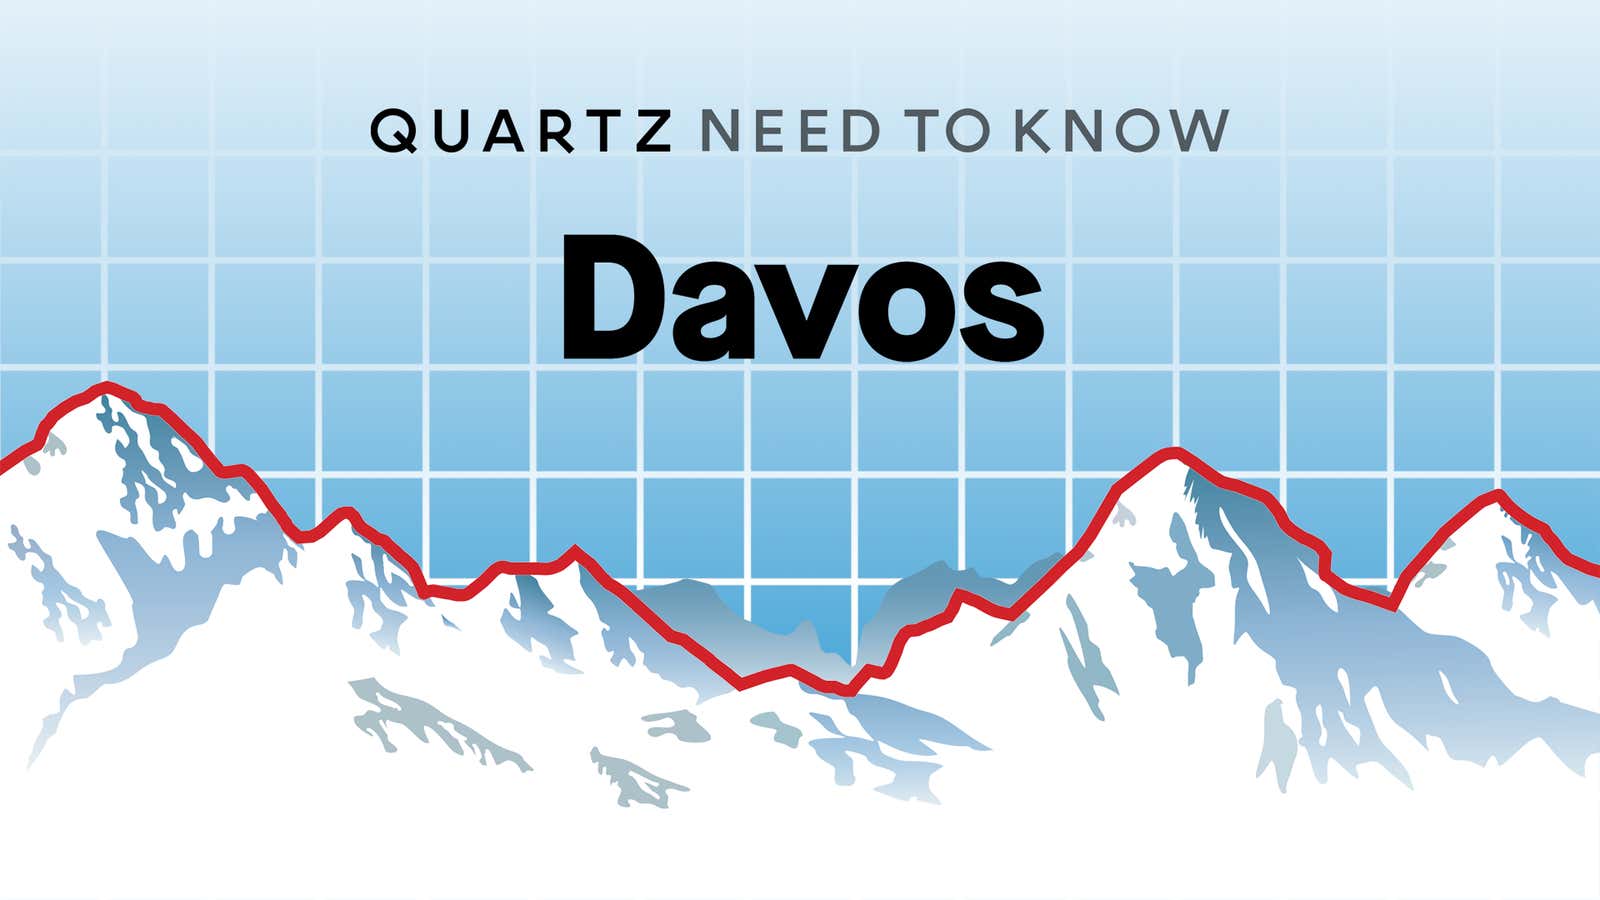 Recession risk, Mooch betrayed: Day 2 at Davos